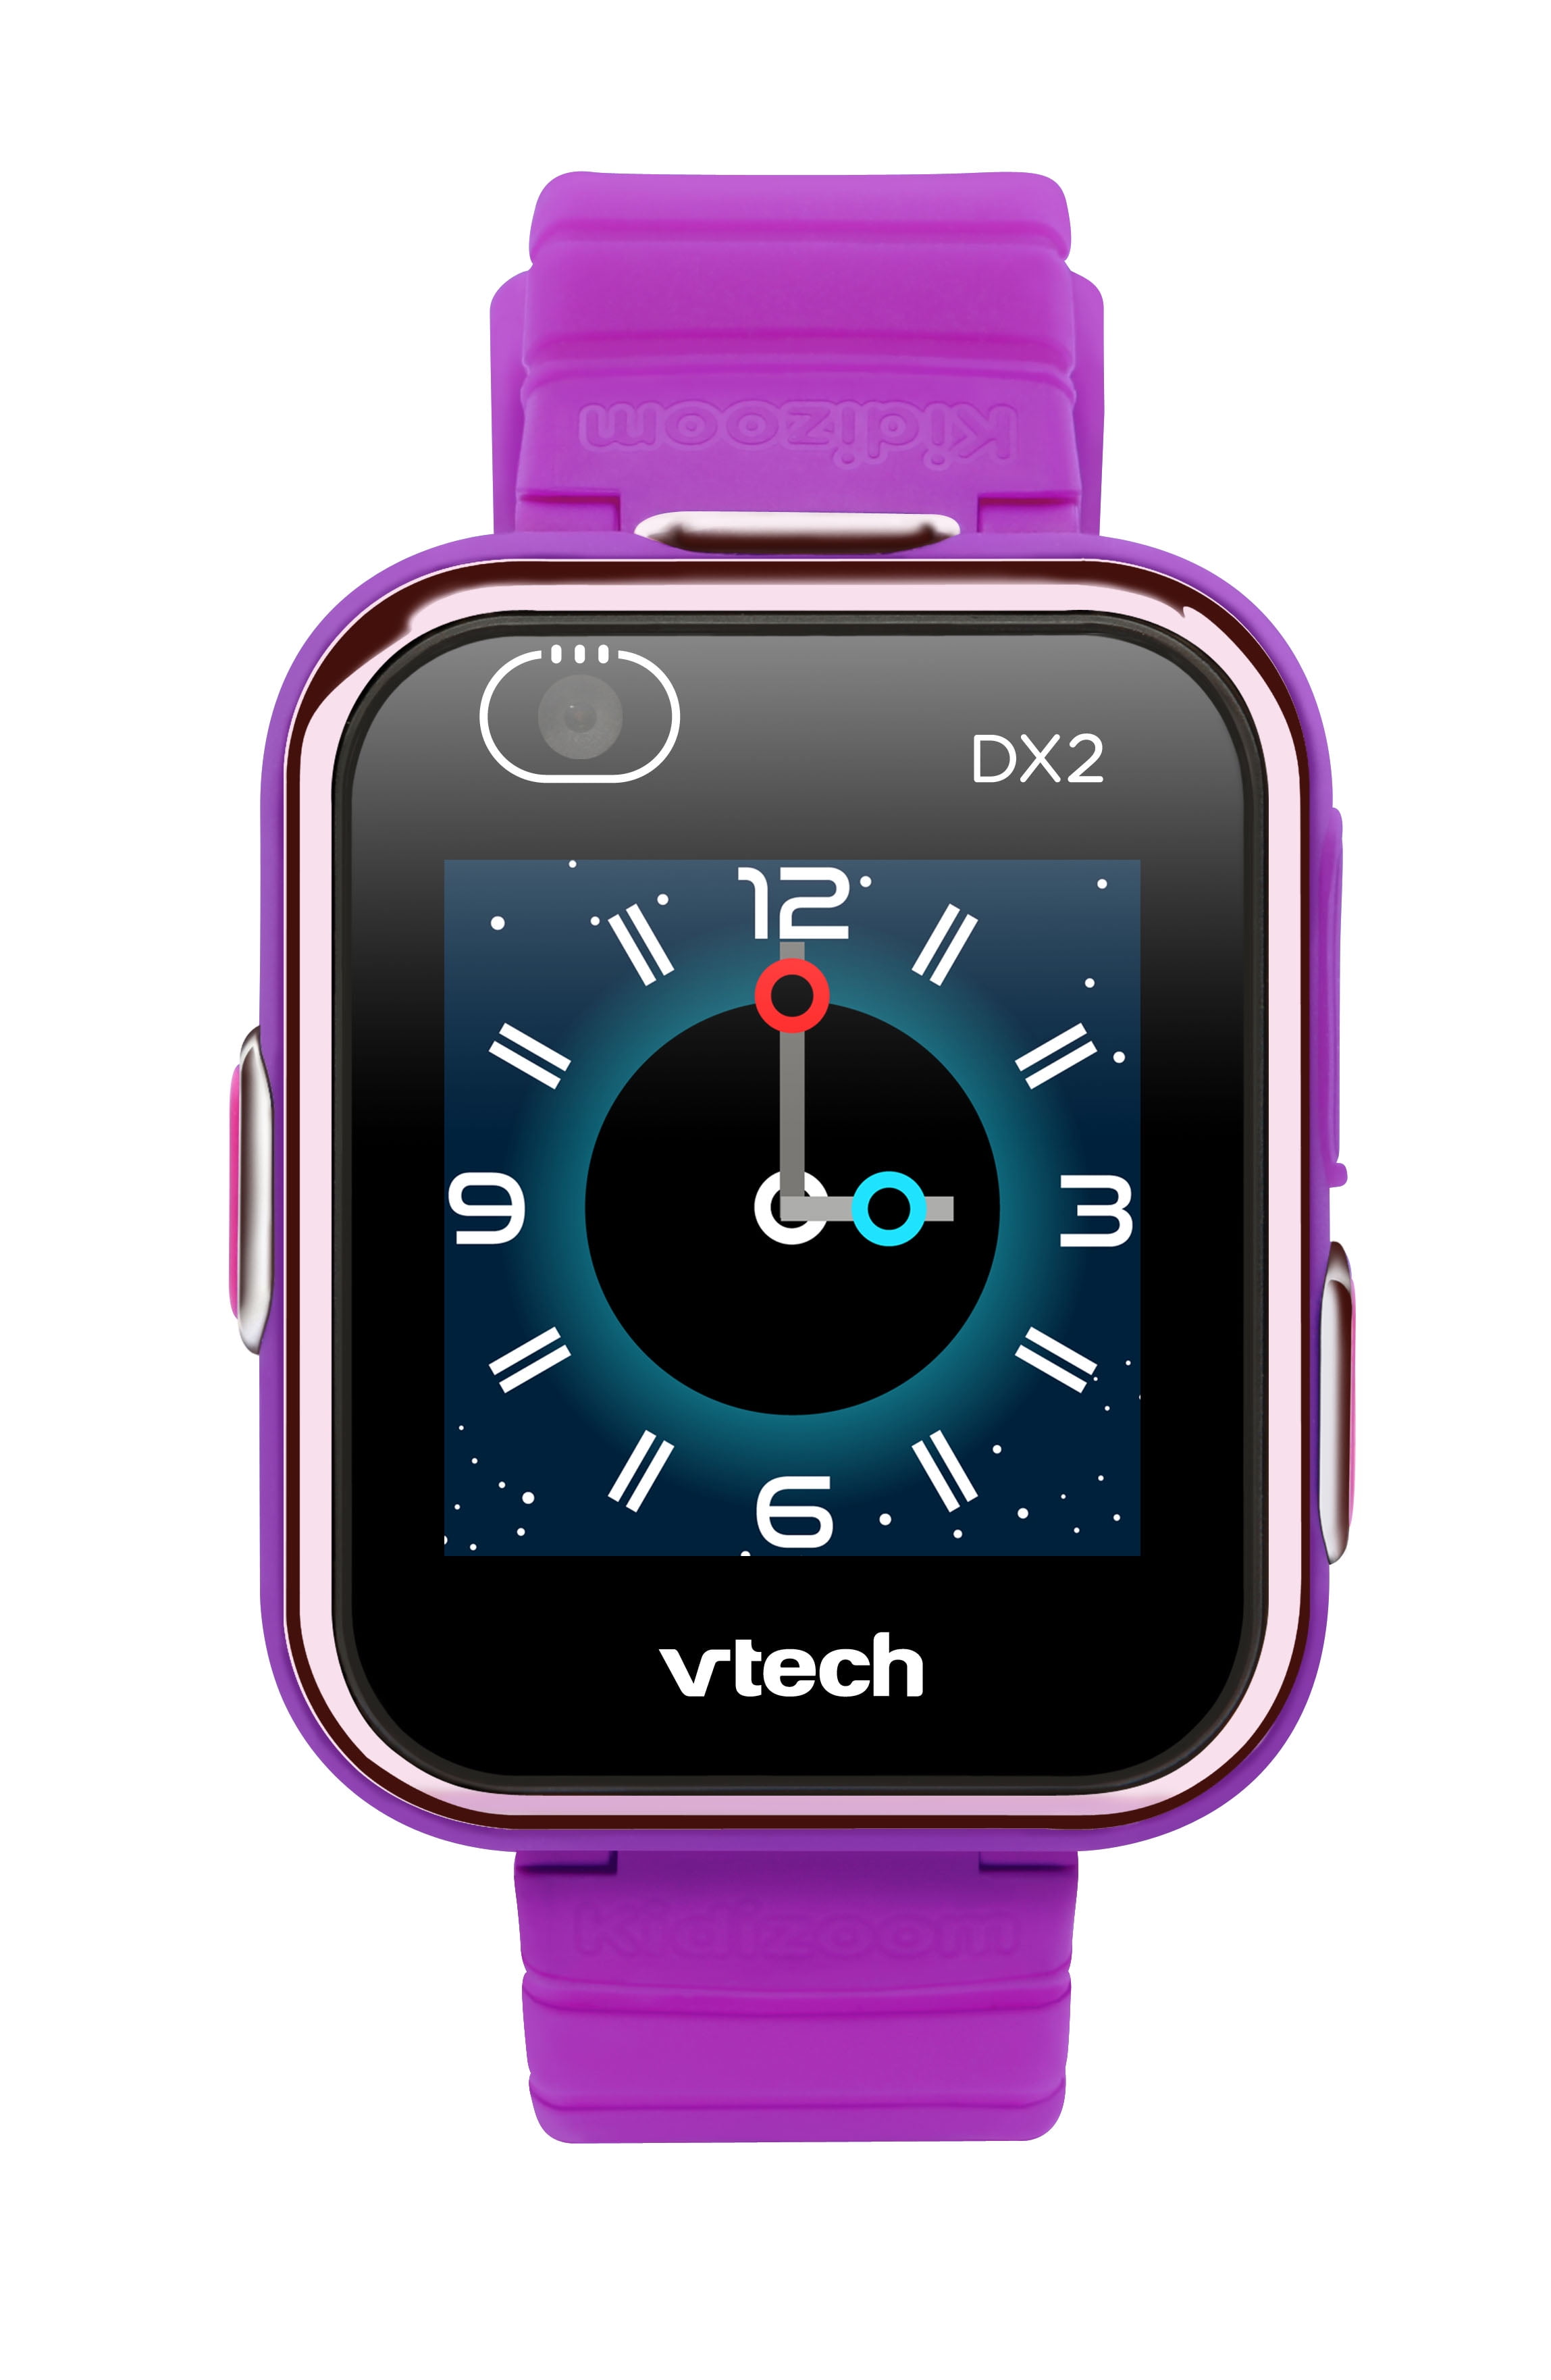 VTech Kidizoom Smartwatch DX2 English Version Purple 